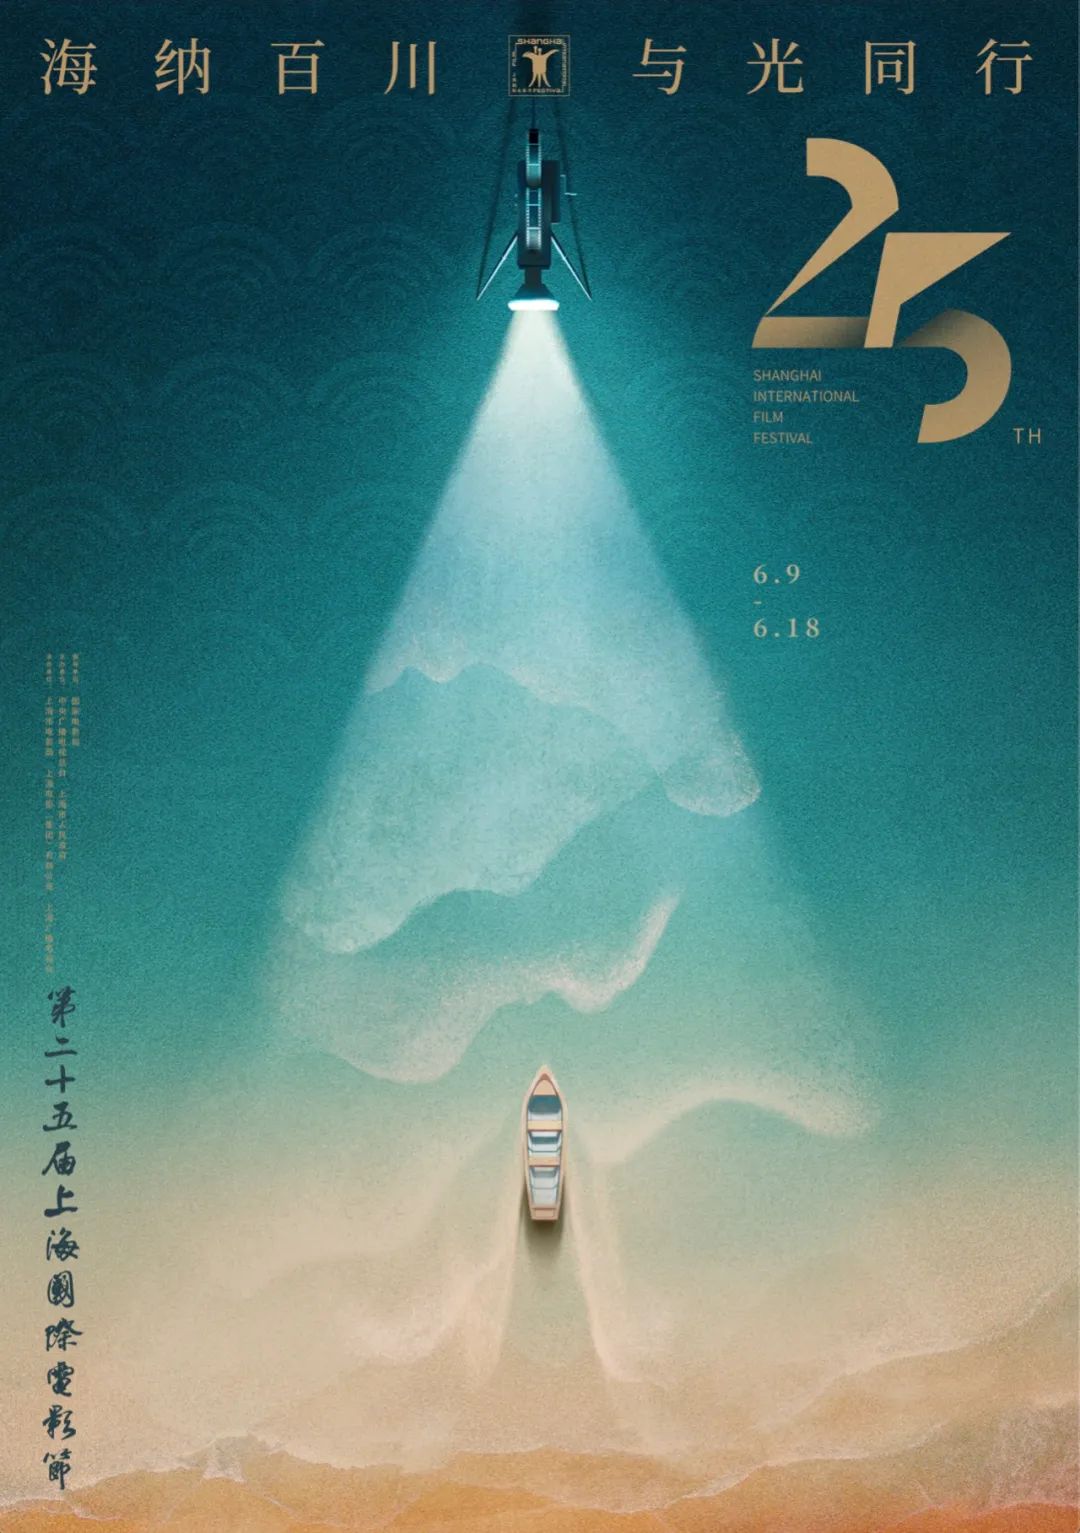 ixdc, 第25届67上海国际电影节海报出炉!审美逐年提高?